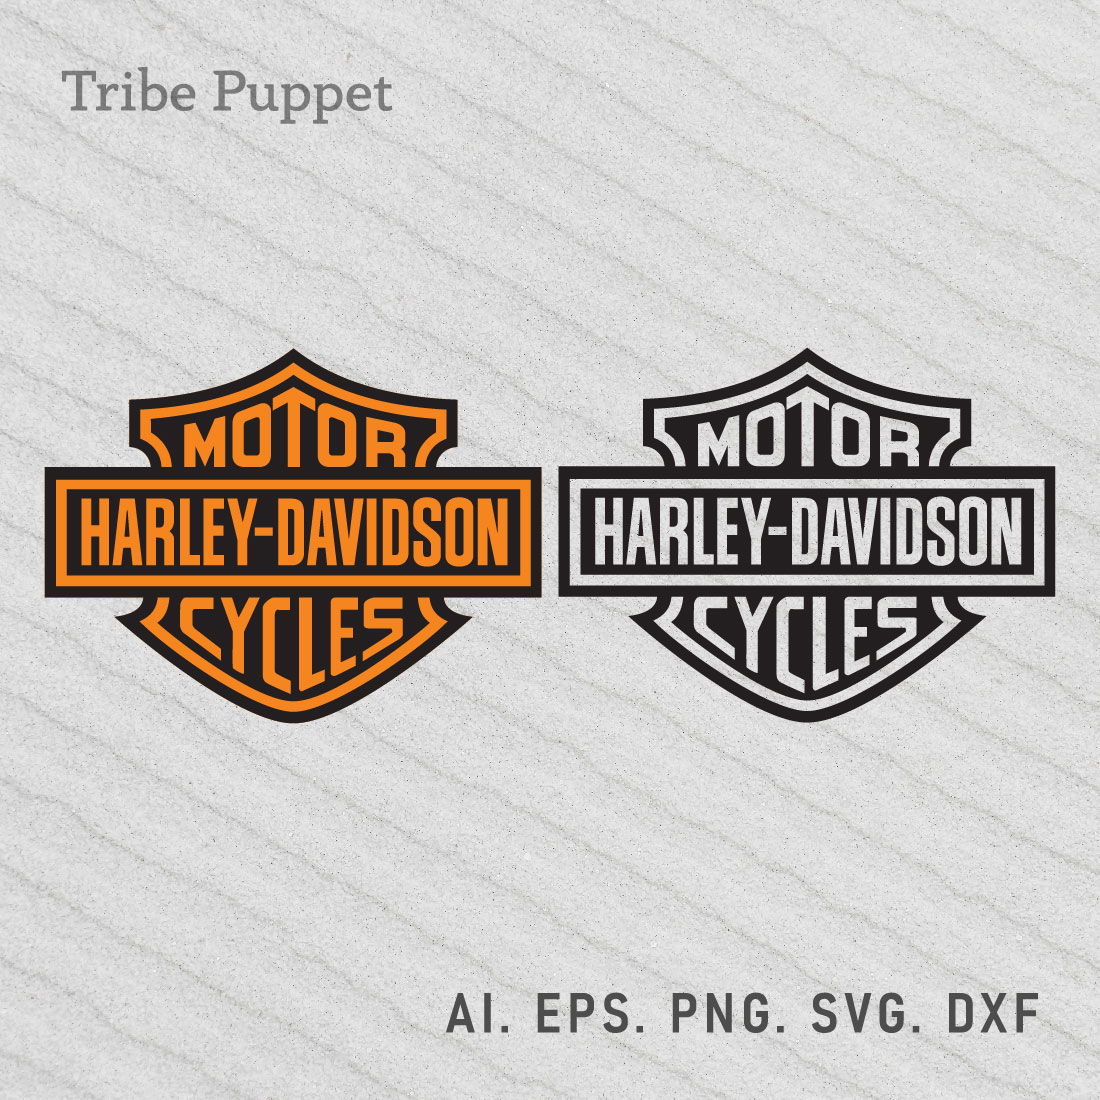 Harley Davidson Bike Logo preview image.